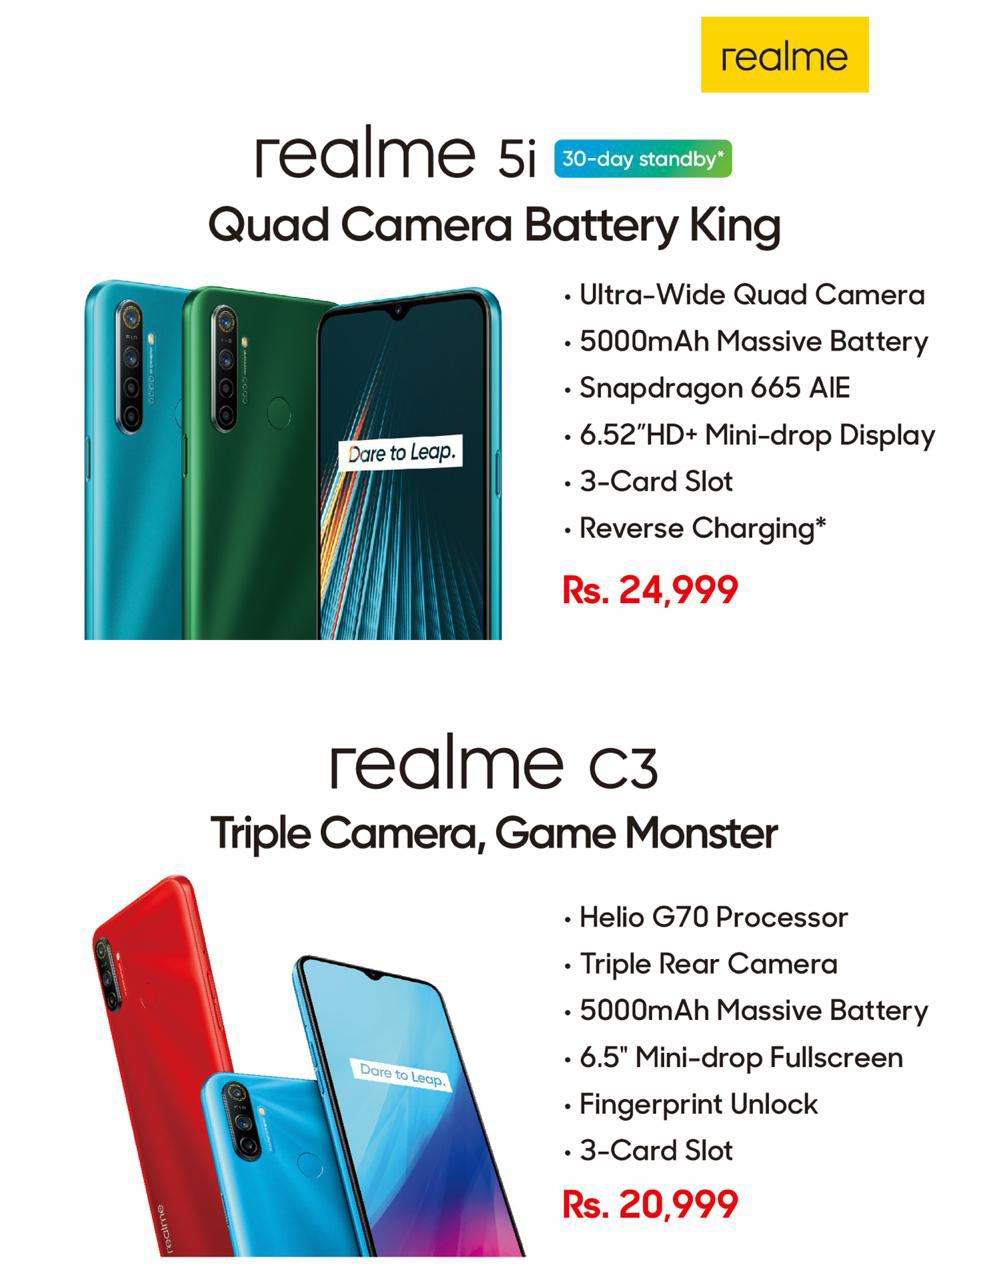 Realme 5i — Quad Camera Battery King and Realme C3 — Triple Camera, Game Monster